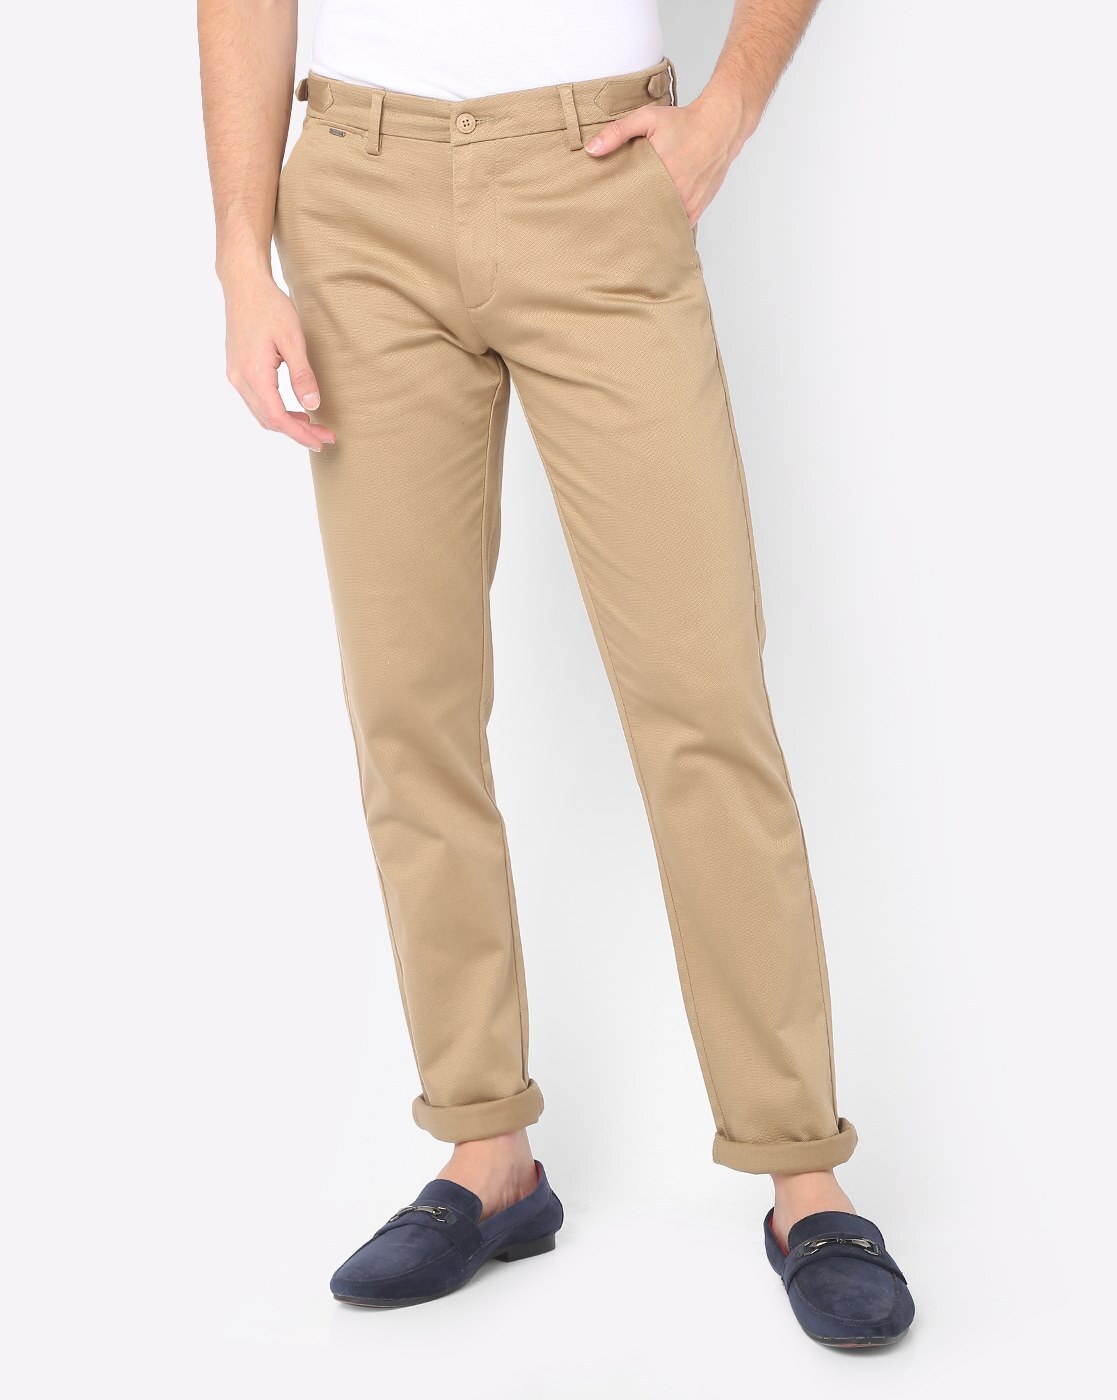 Buy Khaki Trousers  Pants for Men by MONTE CARLO Online  Ajiocom